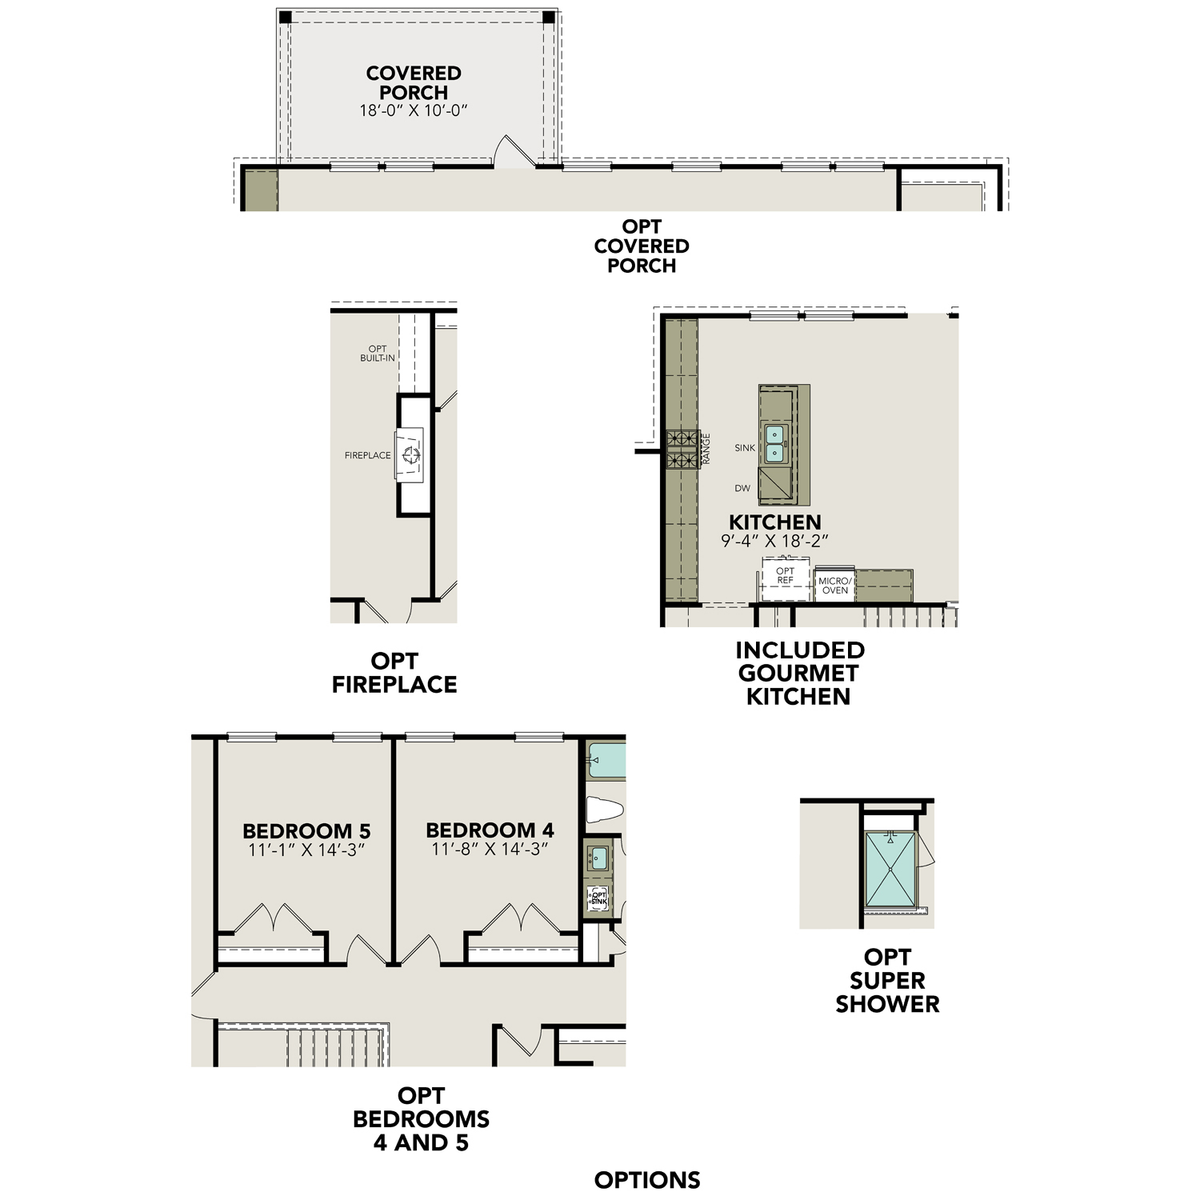 3 - The Ashford E floor plan layout for 200 Matthew Path in Davidson Homes' Potranco Oaks community.